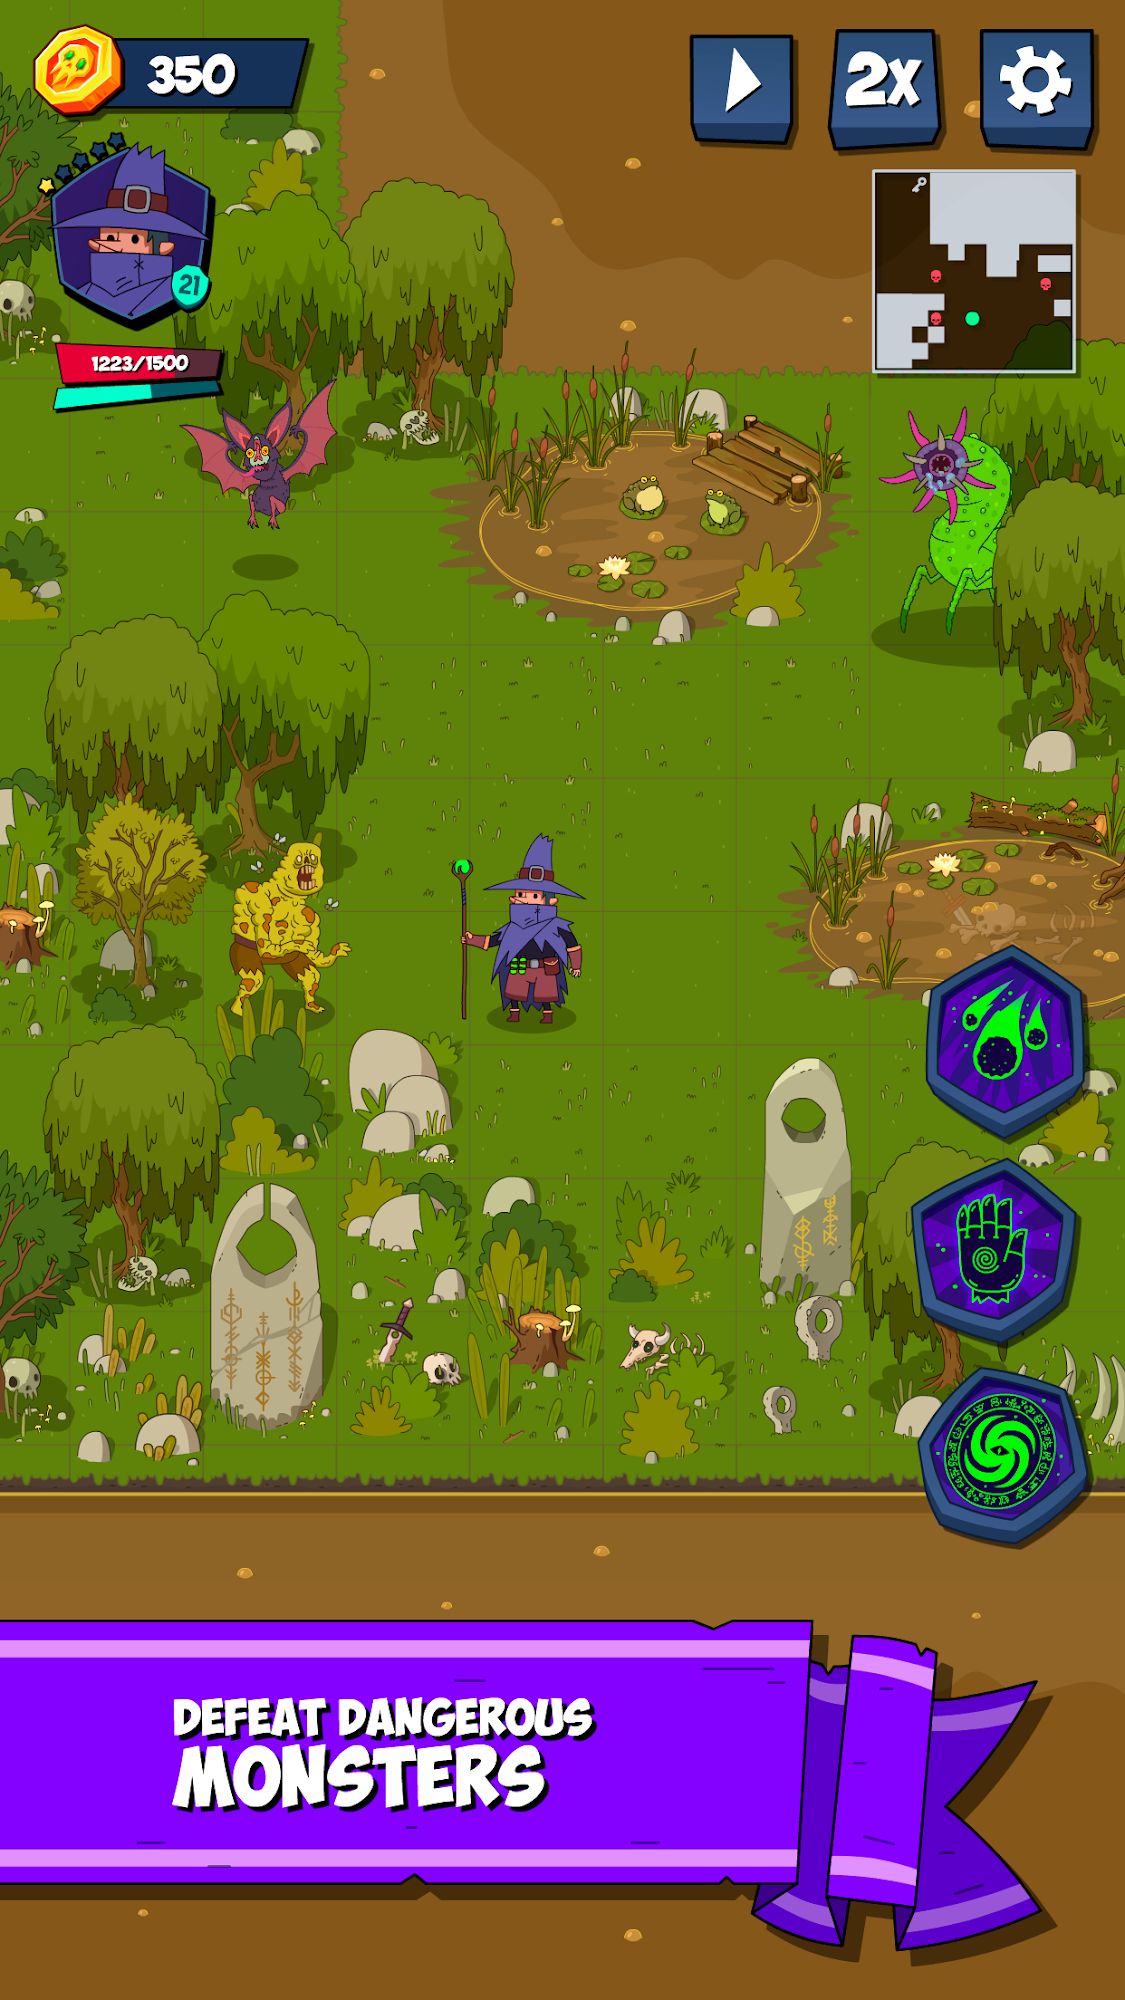 Legendary Adventure - Android game screenshots.